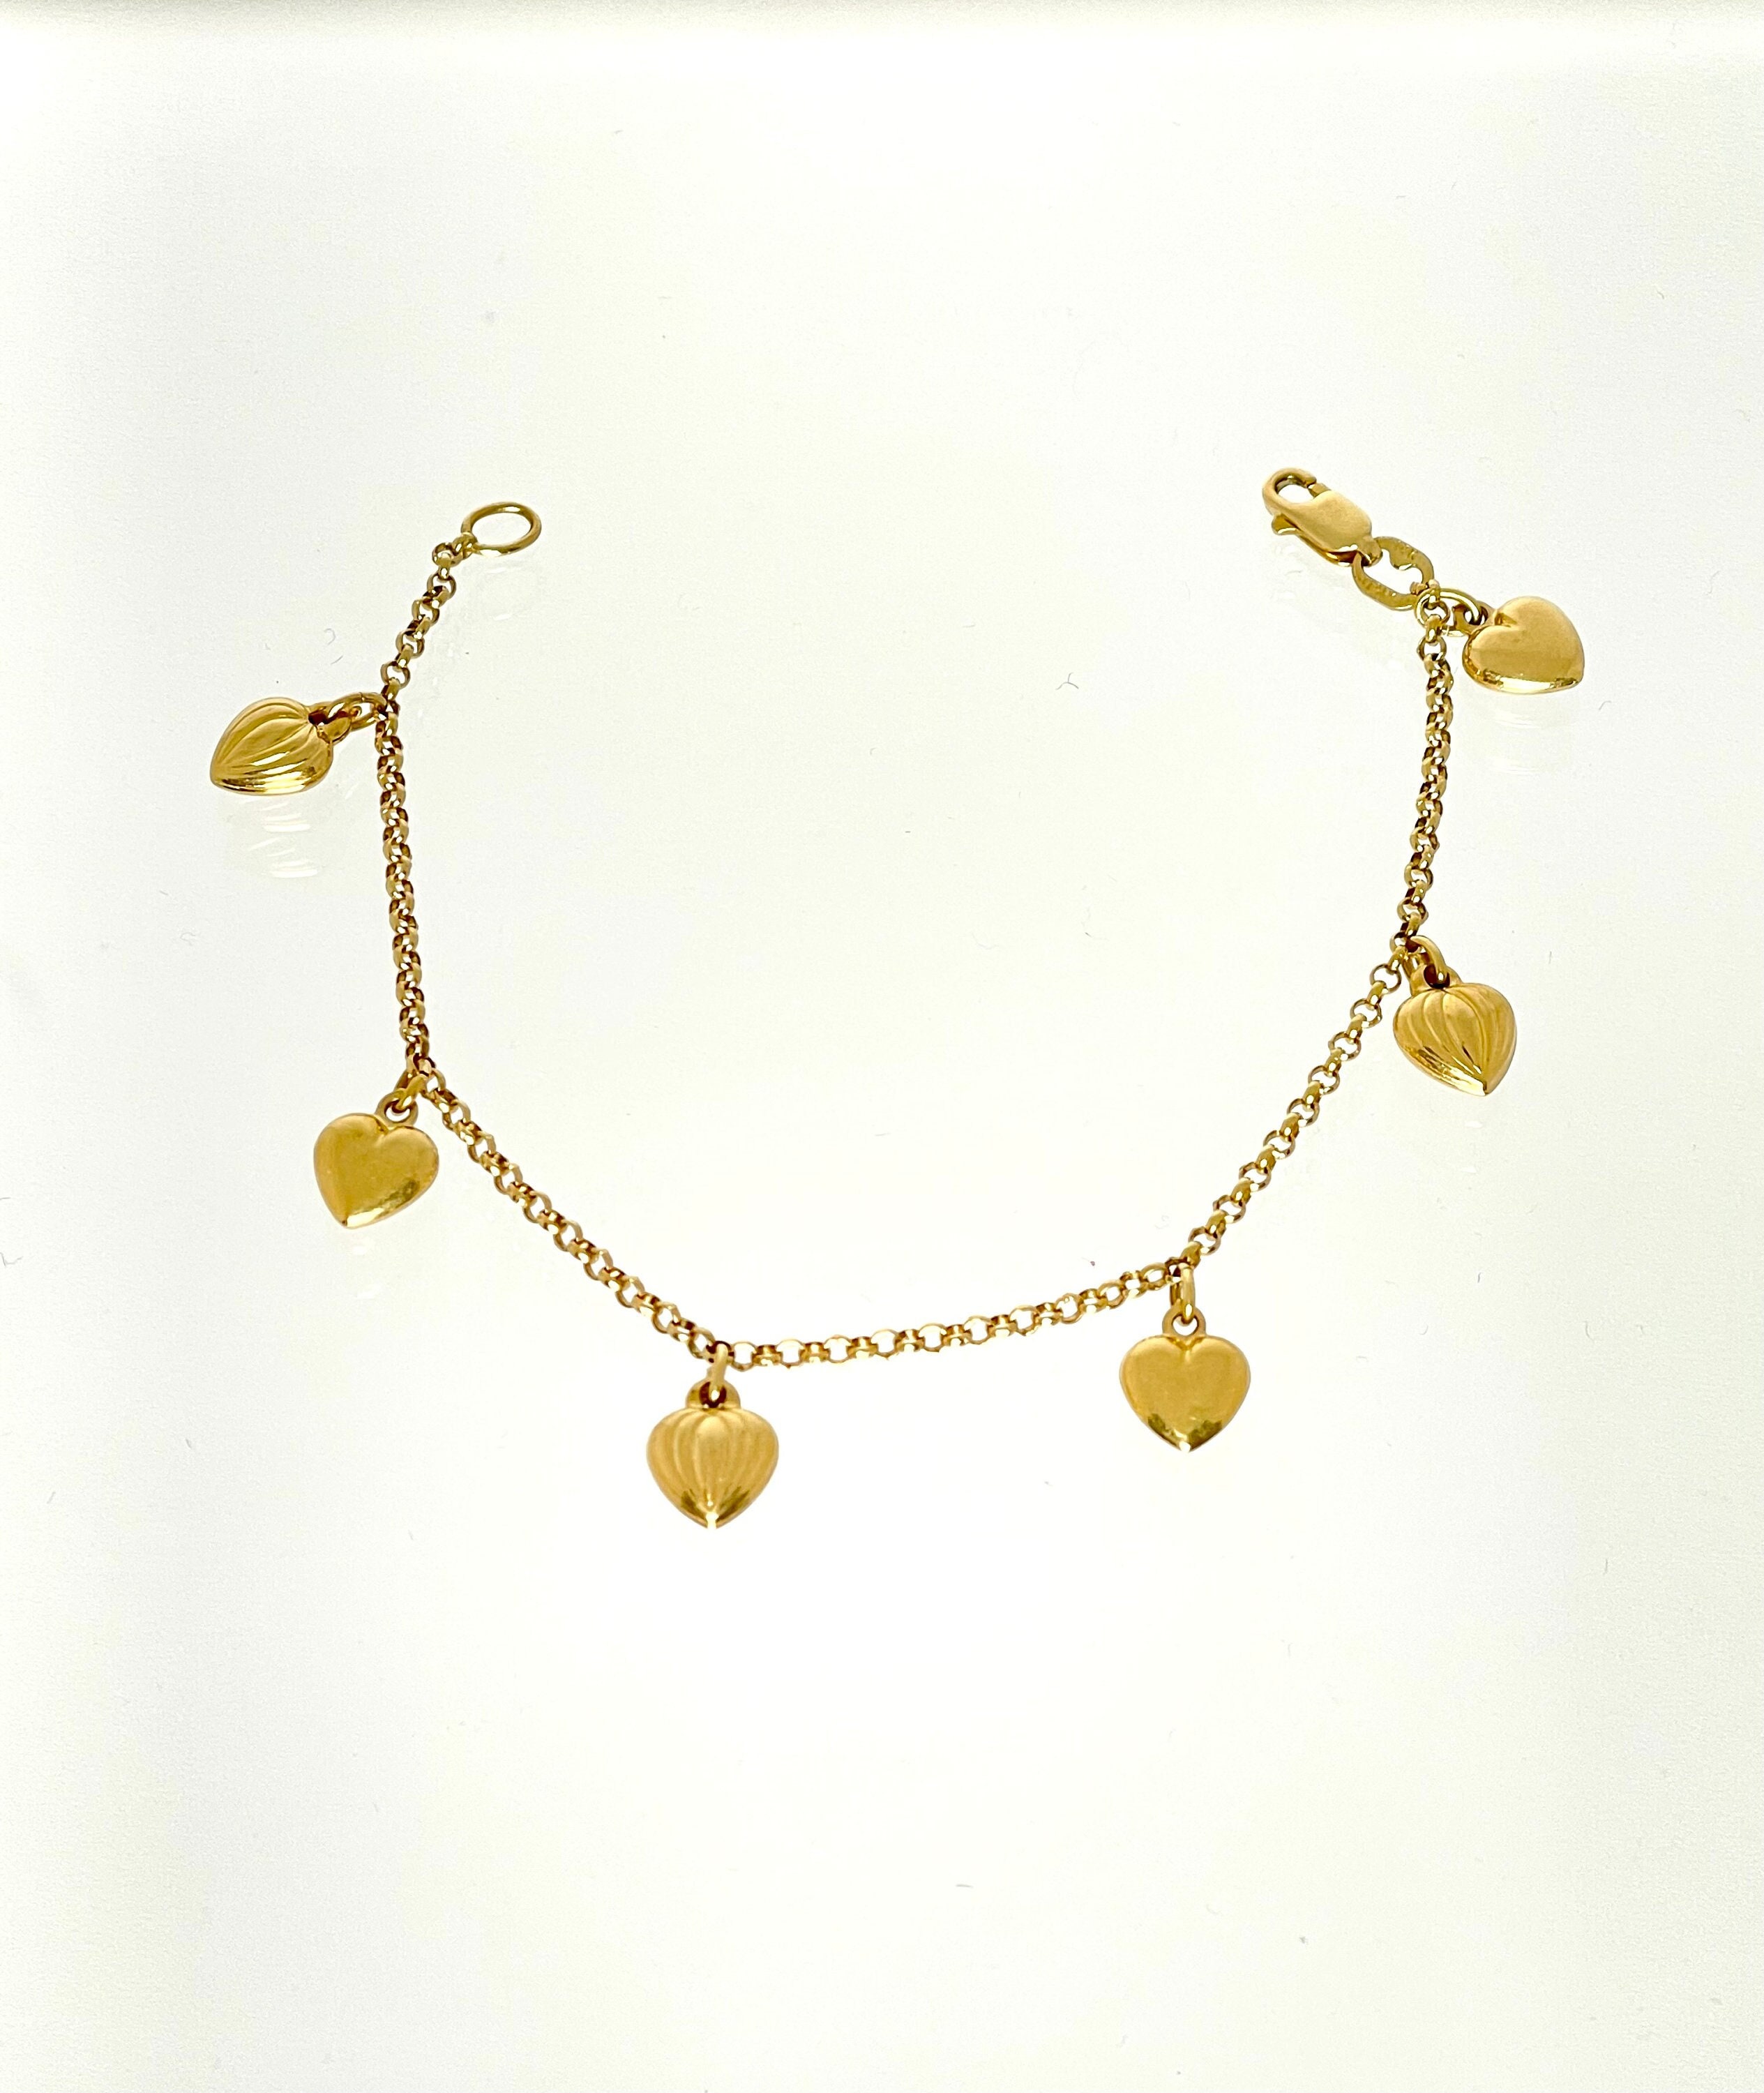 Edessa 14k Gold Heart Charm Bracelet – iriss studio